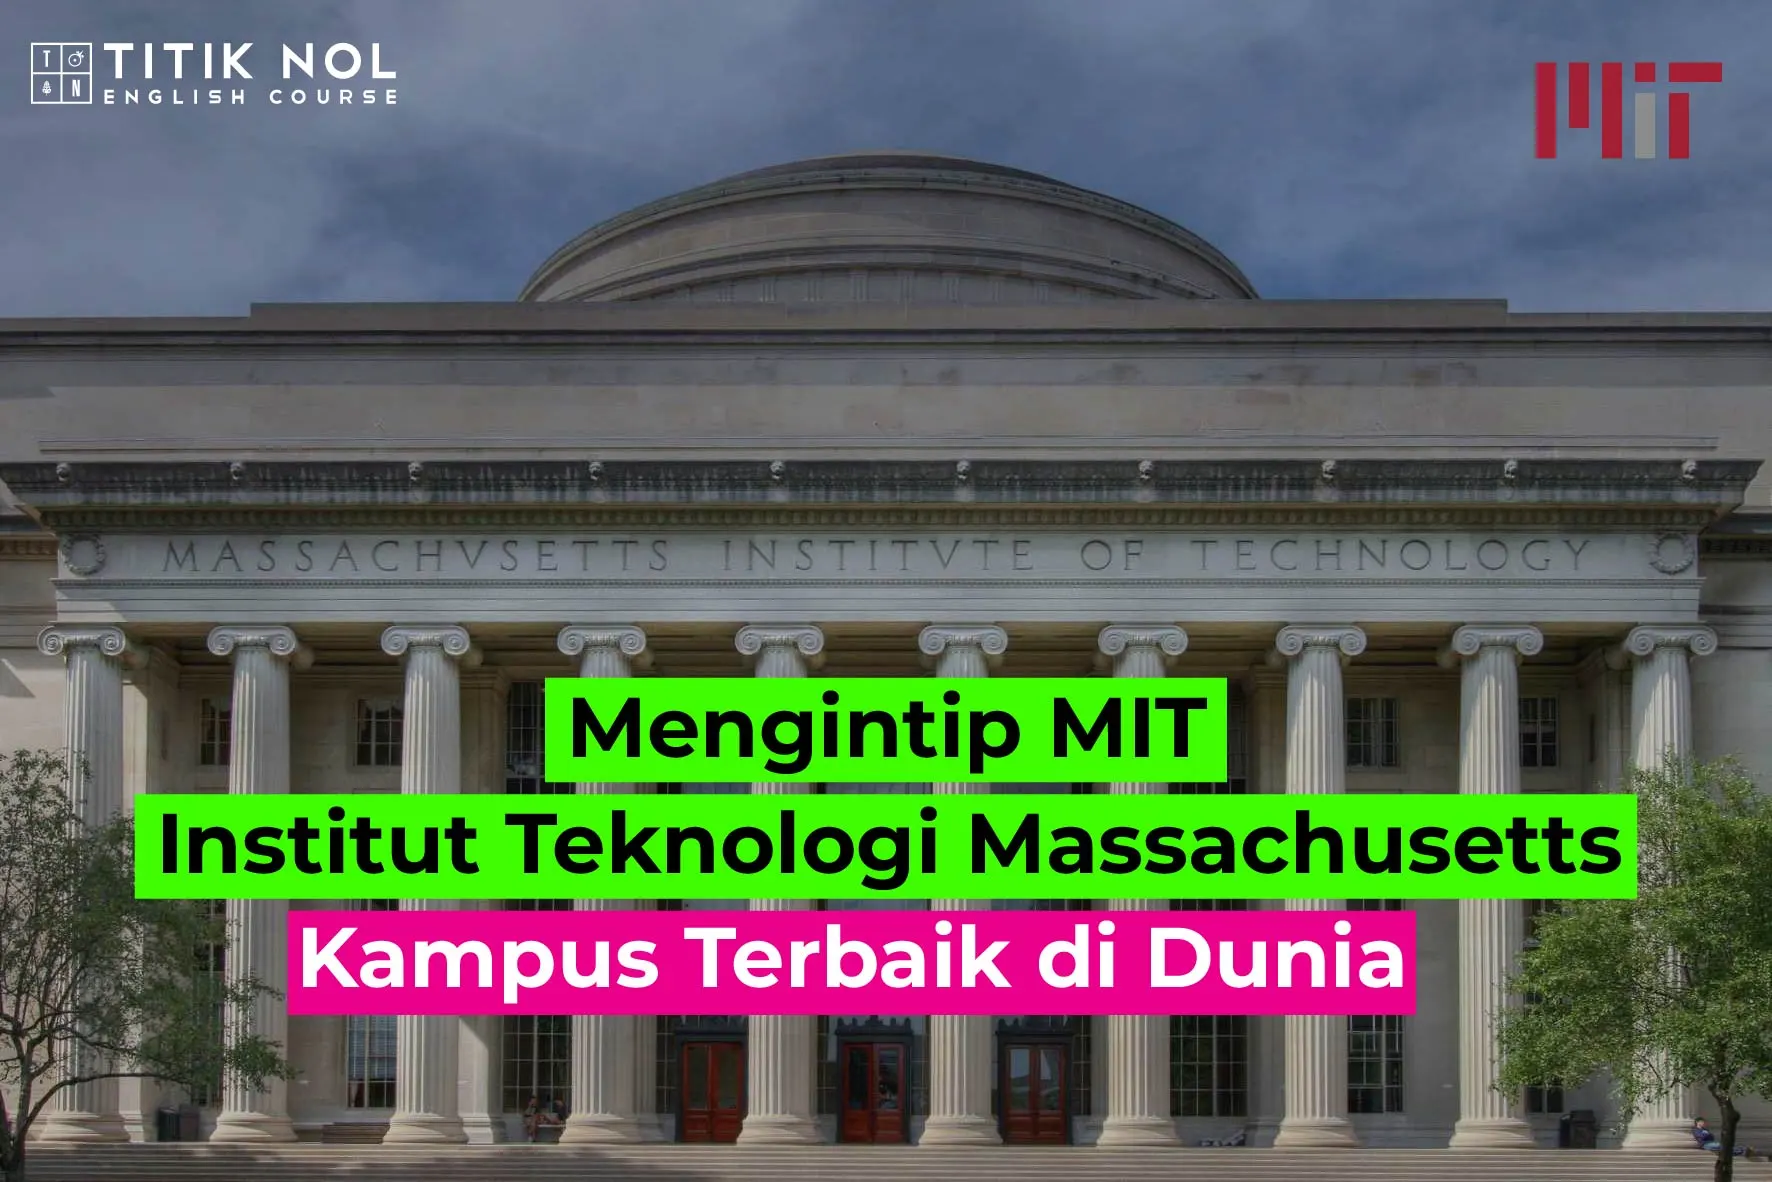 MIT Institut Teknologi Massachusetts